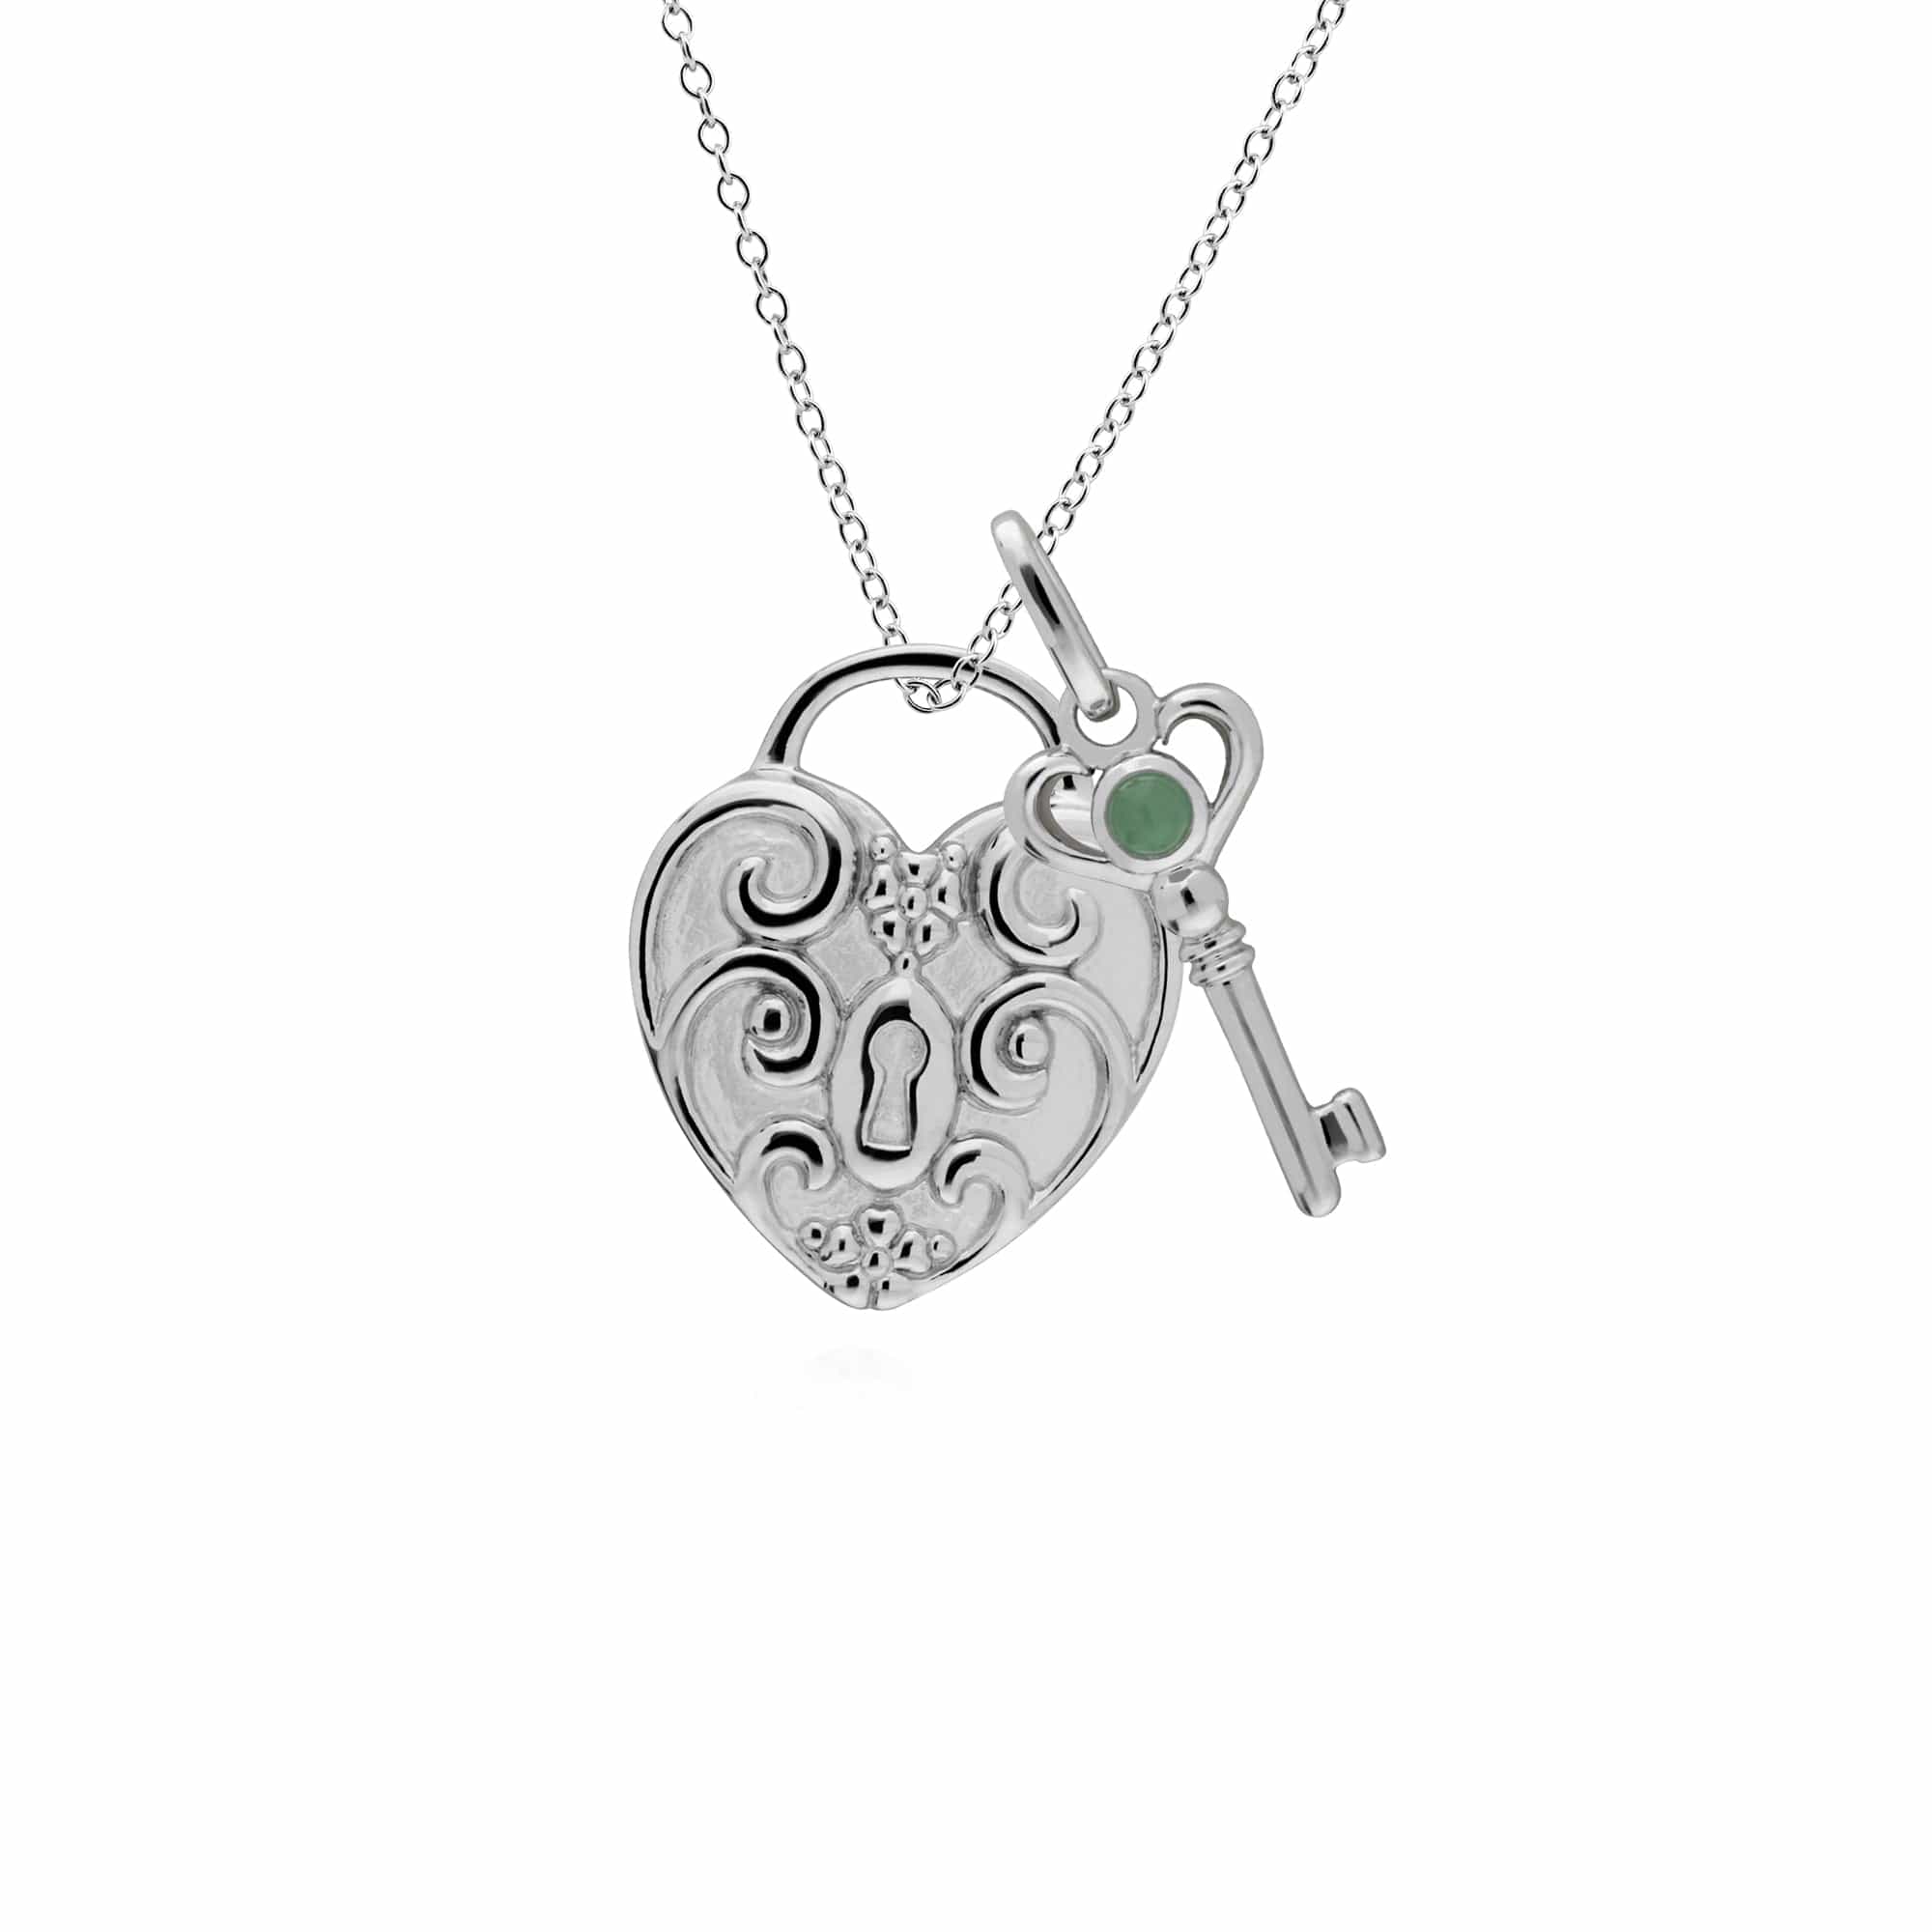 270P027501925-270P026601925 Classic Swirl Heart Lock Pendant & Jade Key Charm in 925 Sterling Silver 1